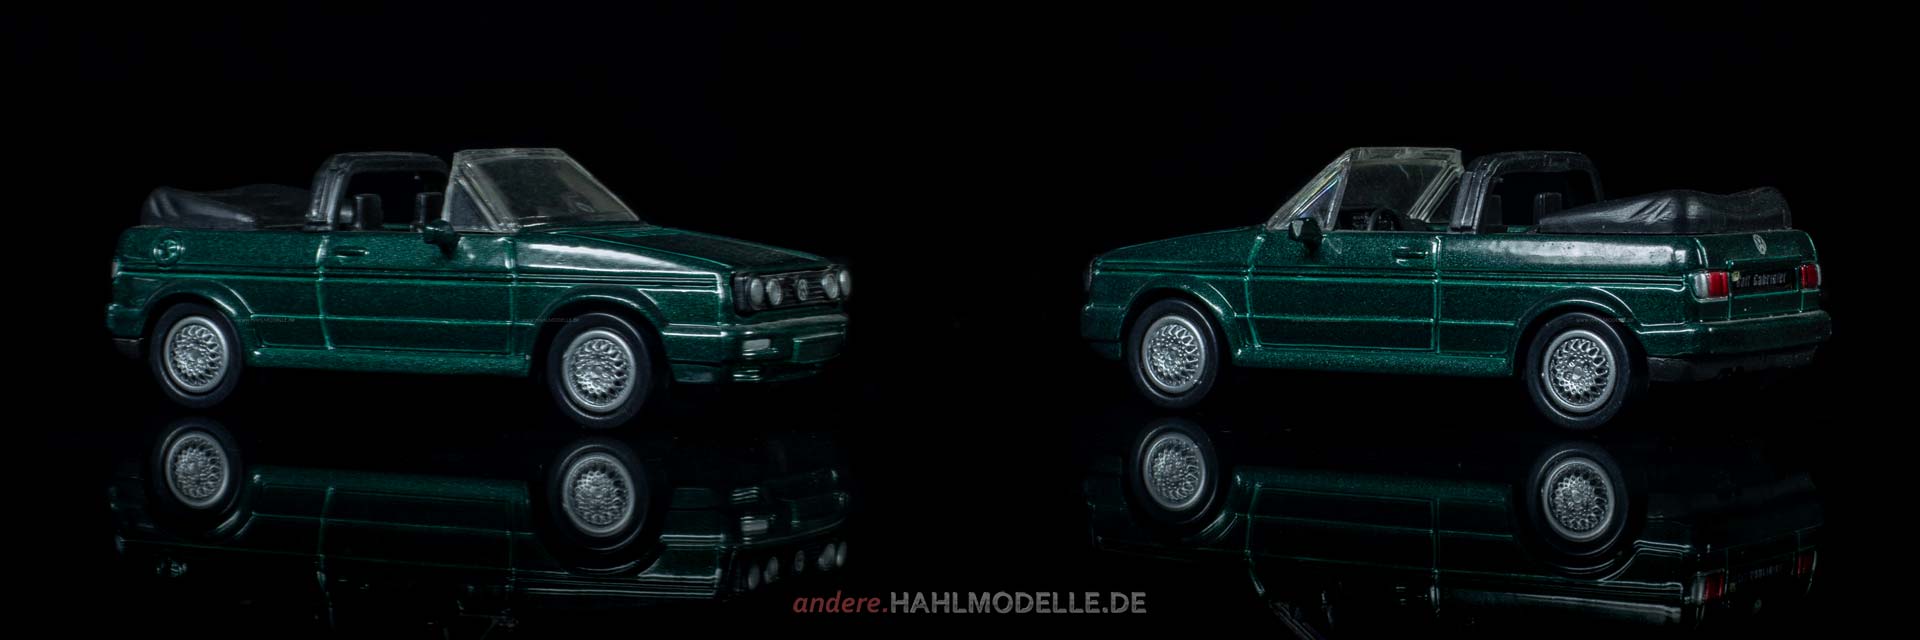 Volkswagen Golf I | Cabriolet | New Ray | www.andere.hahlmodelle.de